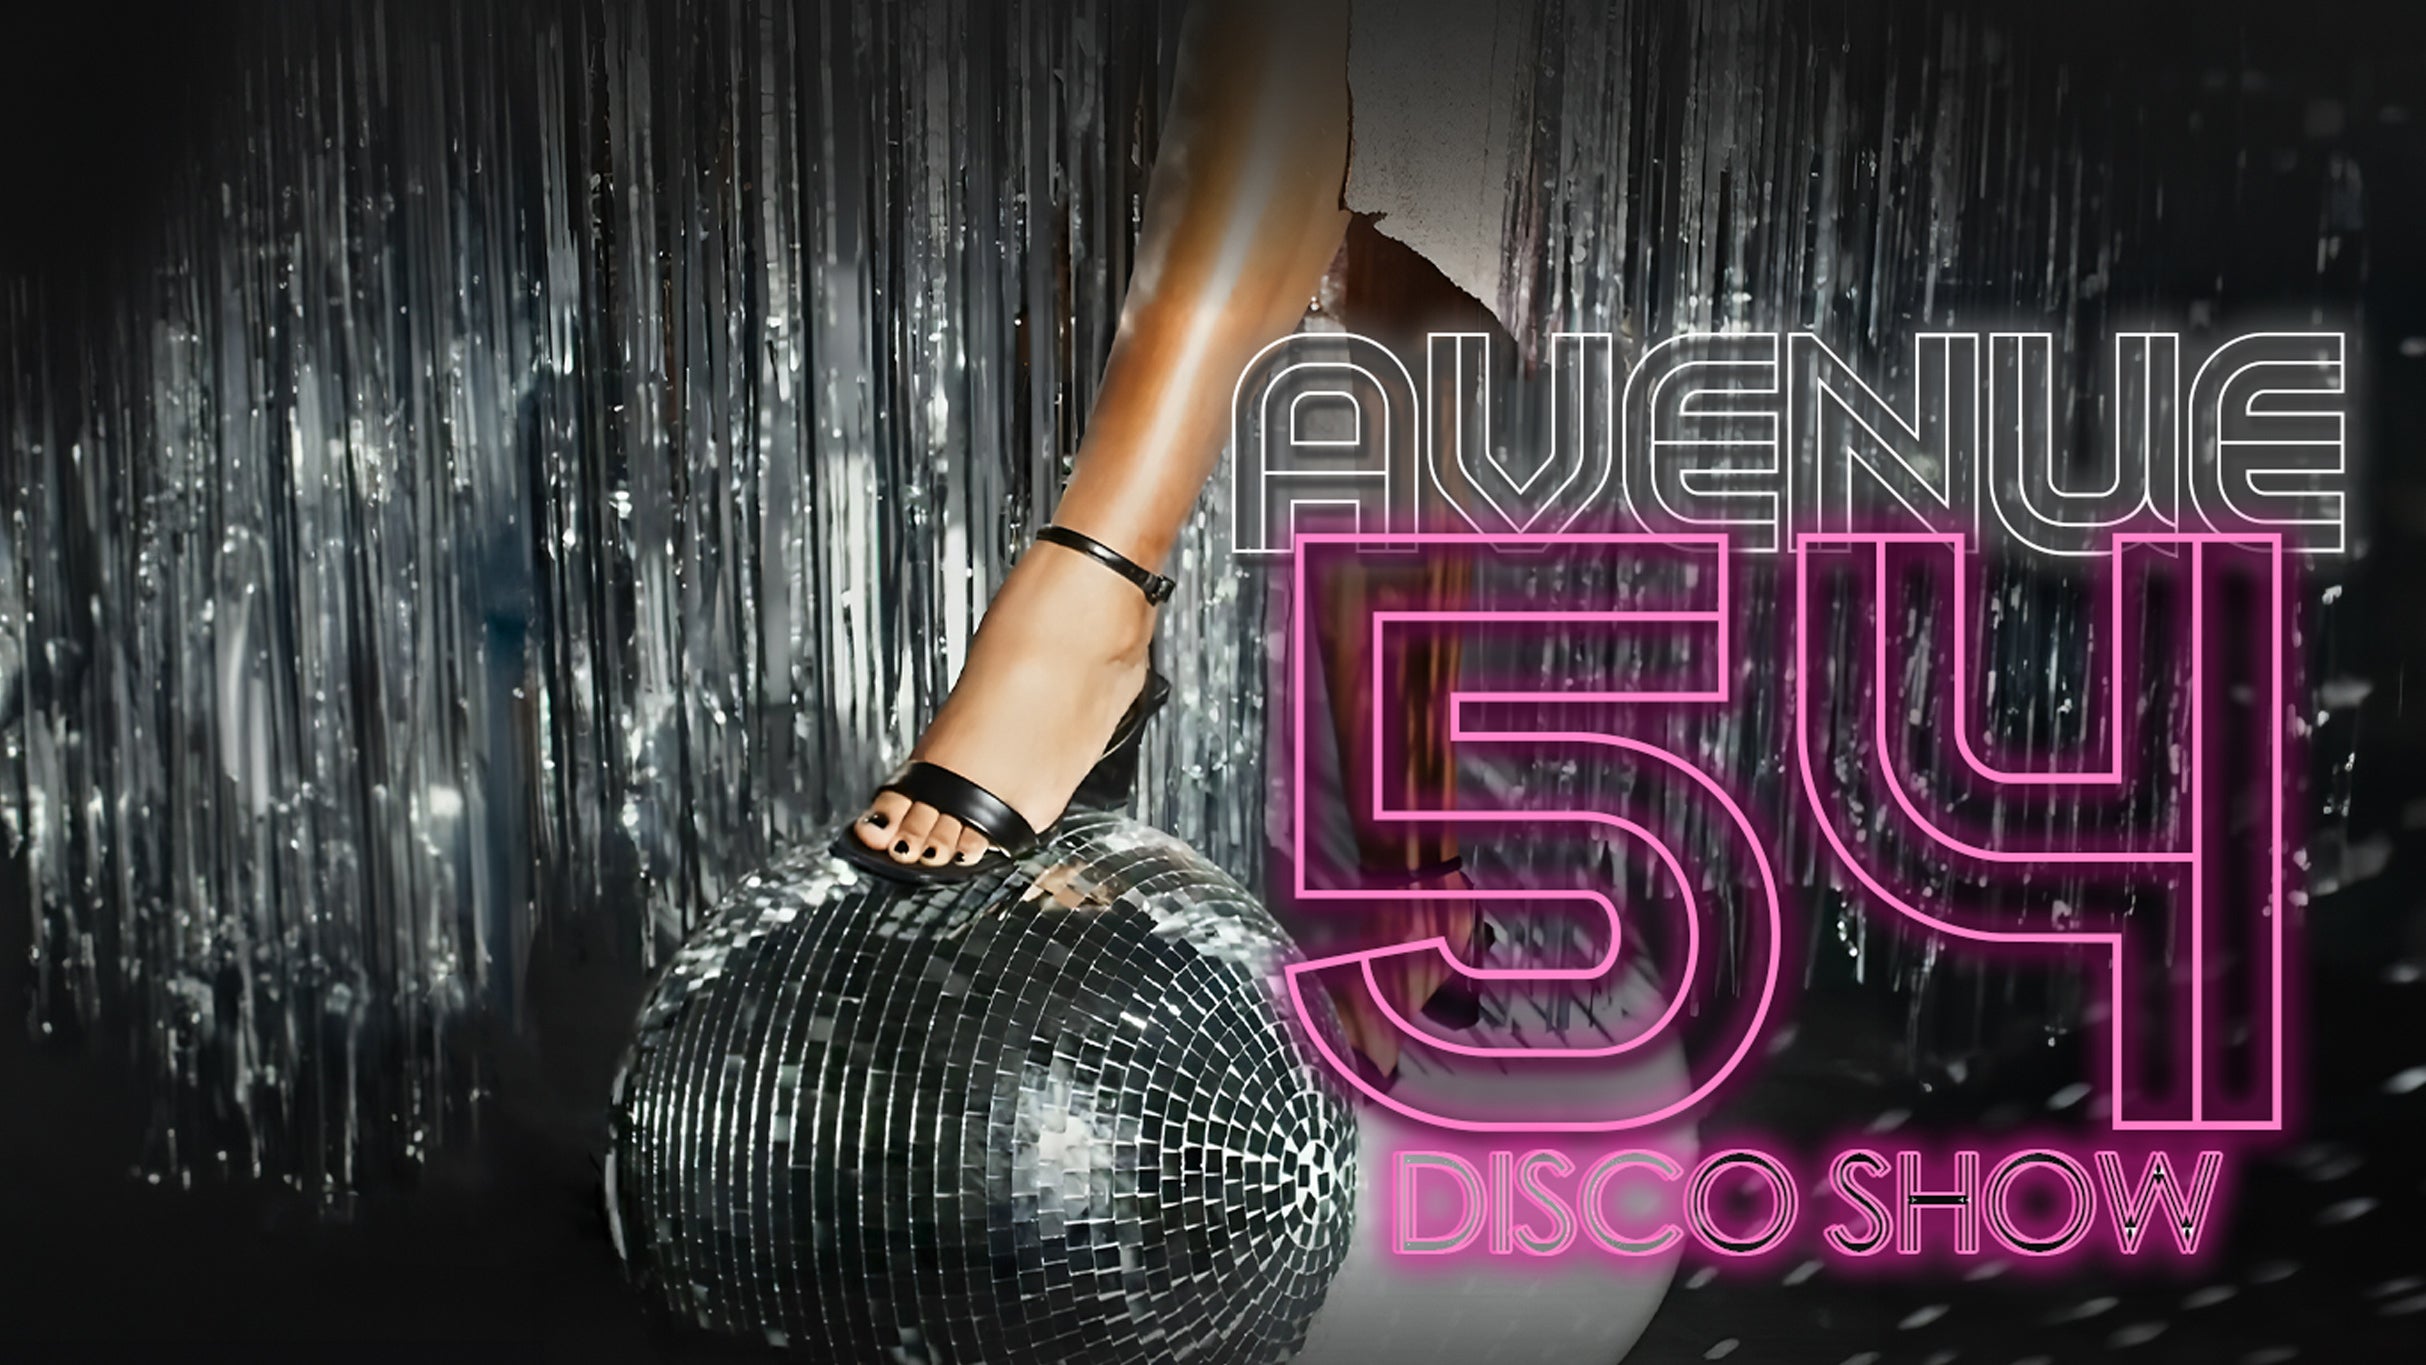 Avenue 54 Disco Show presales in Montreal